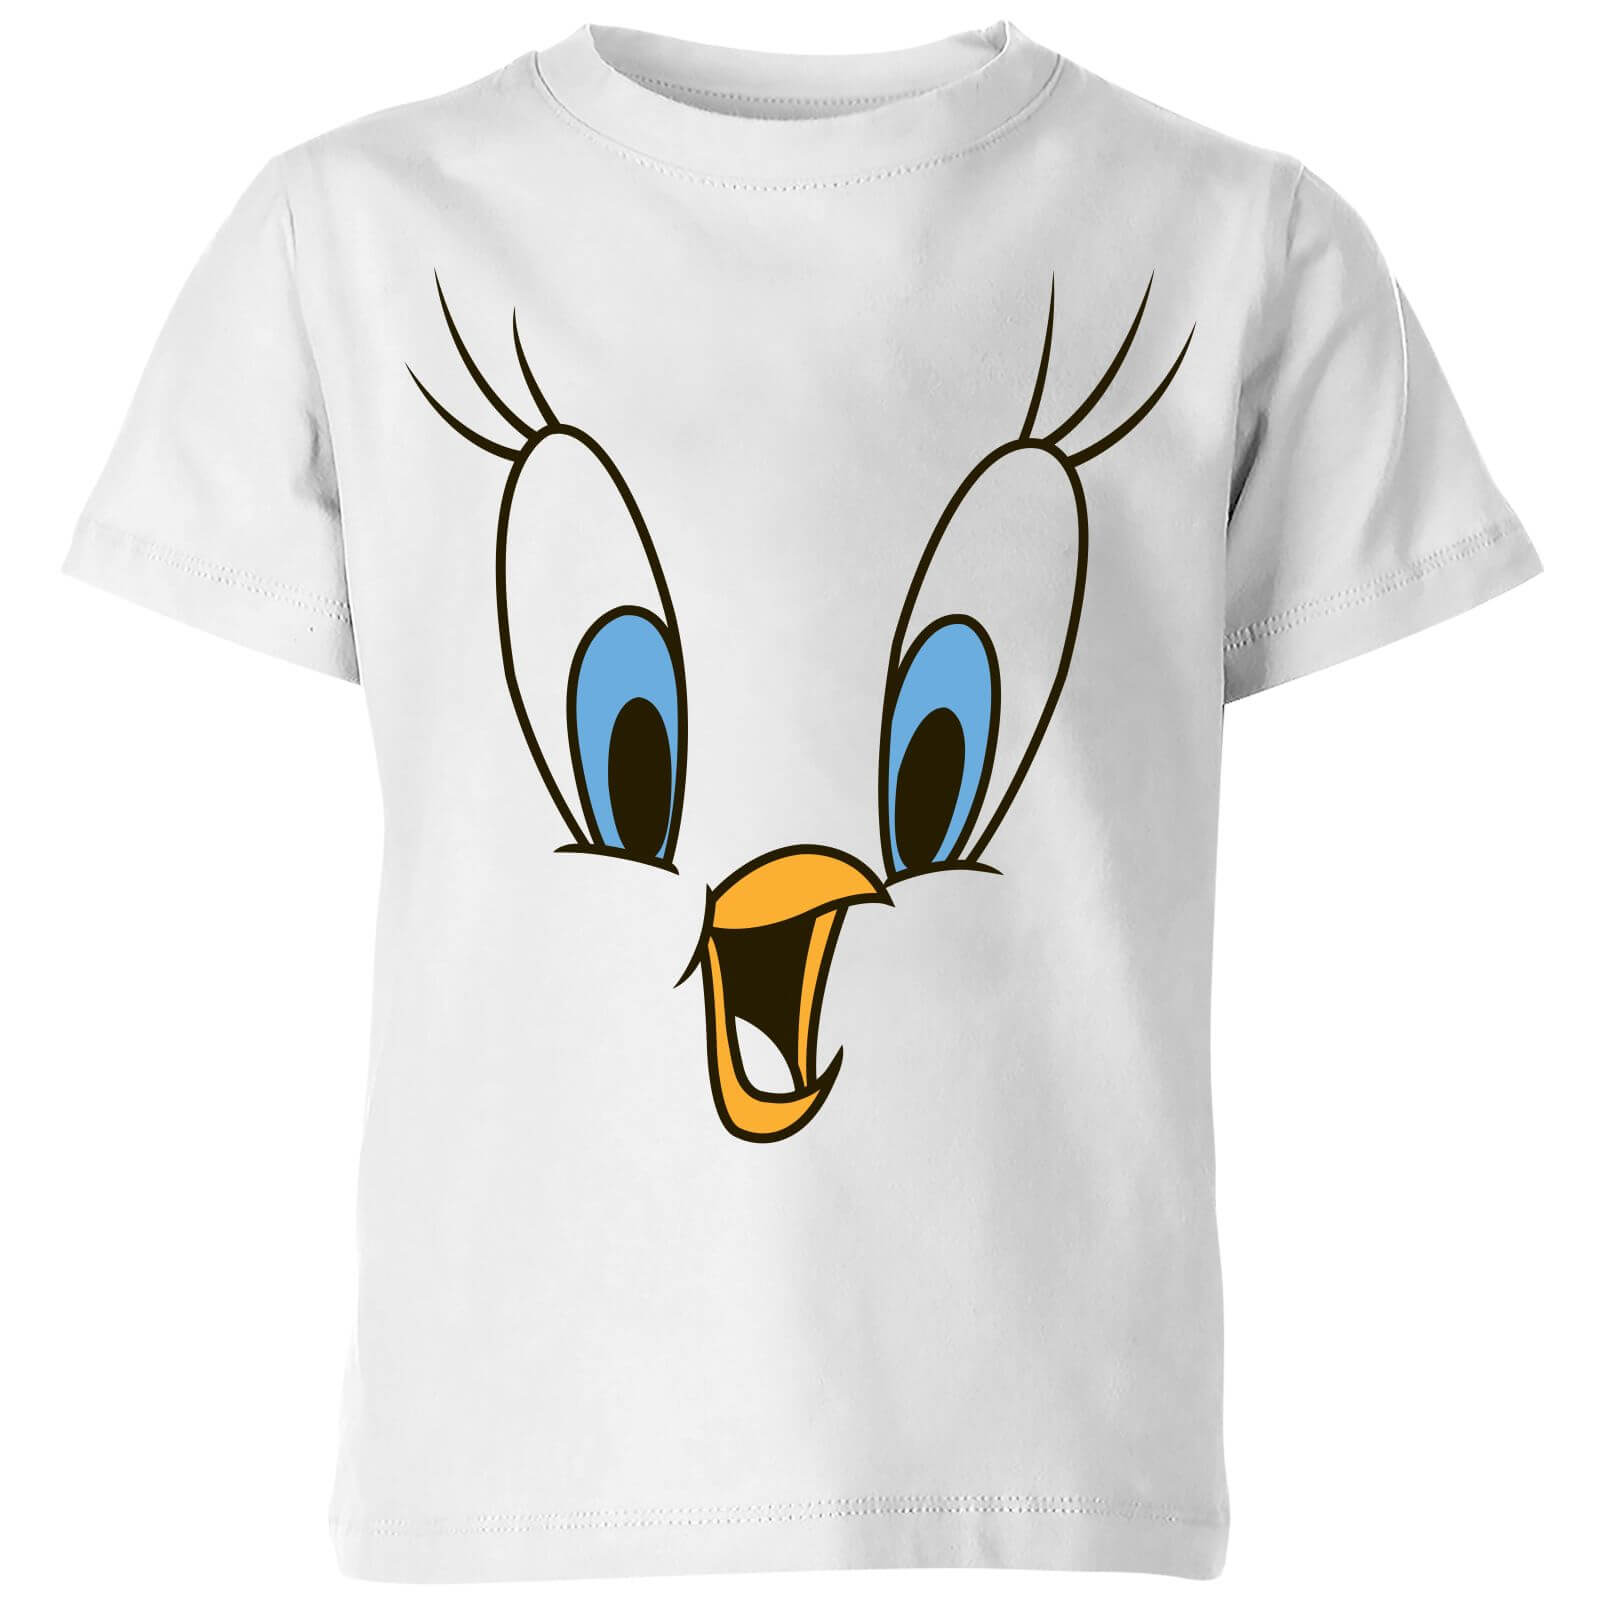 Looney Tunes Tweety Face Kids' T-Shirt - White - 7-8 Years - White